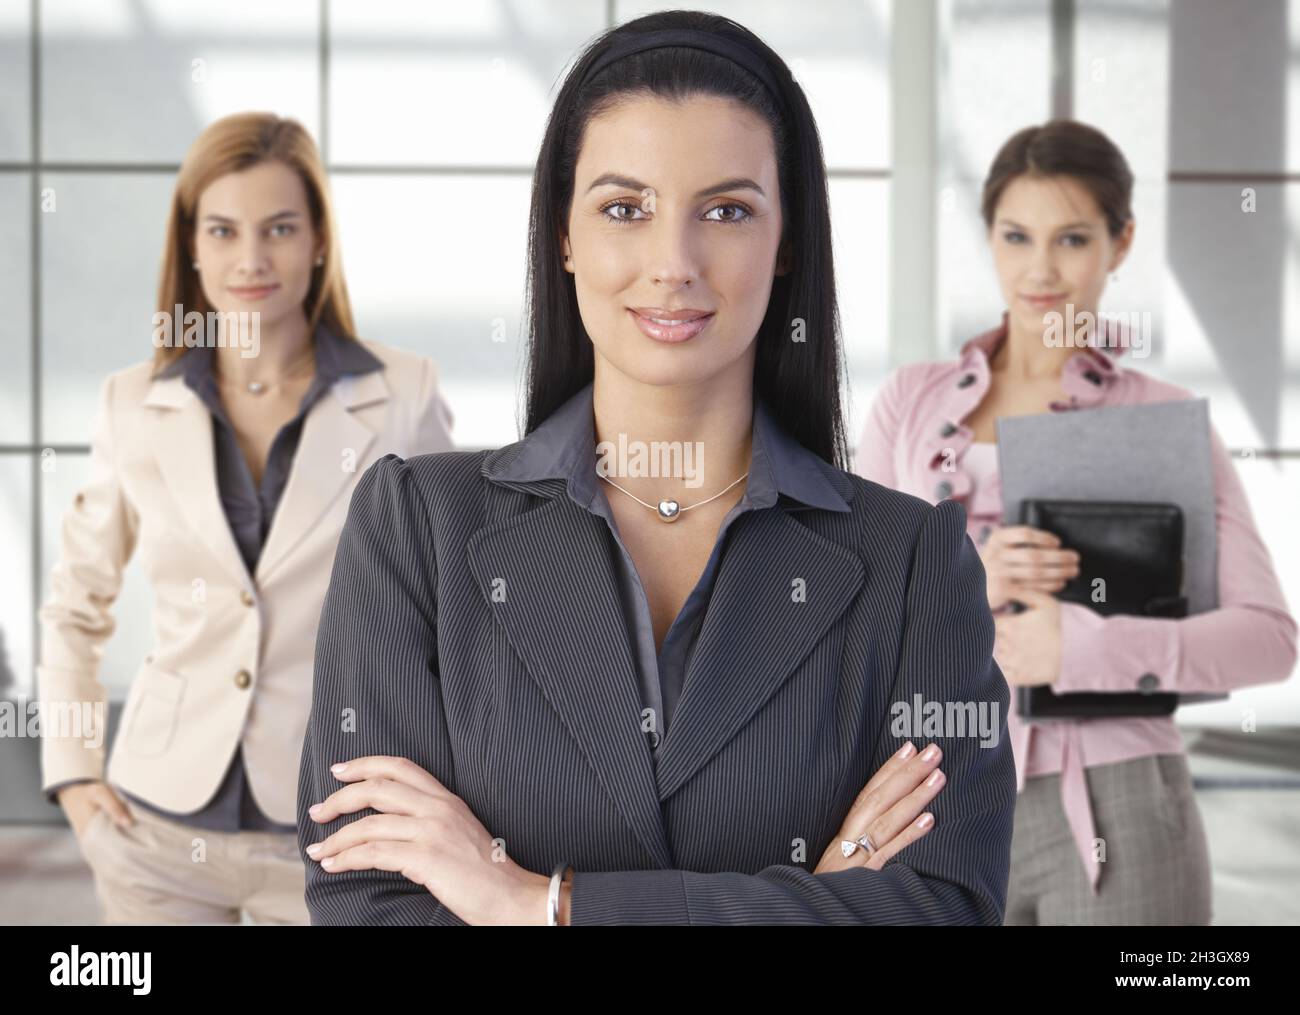 Team portrait of happy businesswomen in office Stock Photo